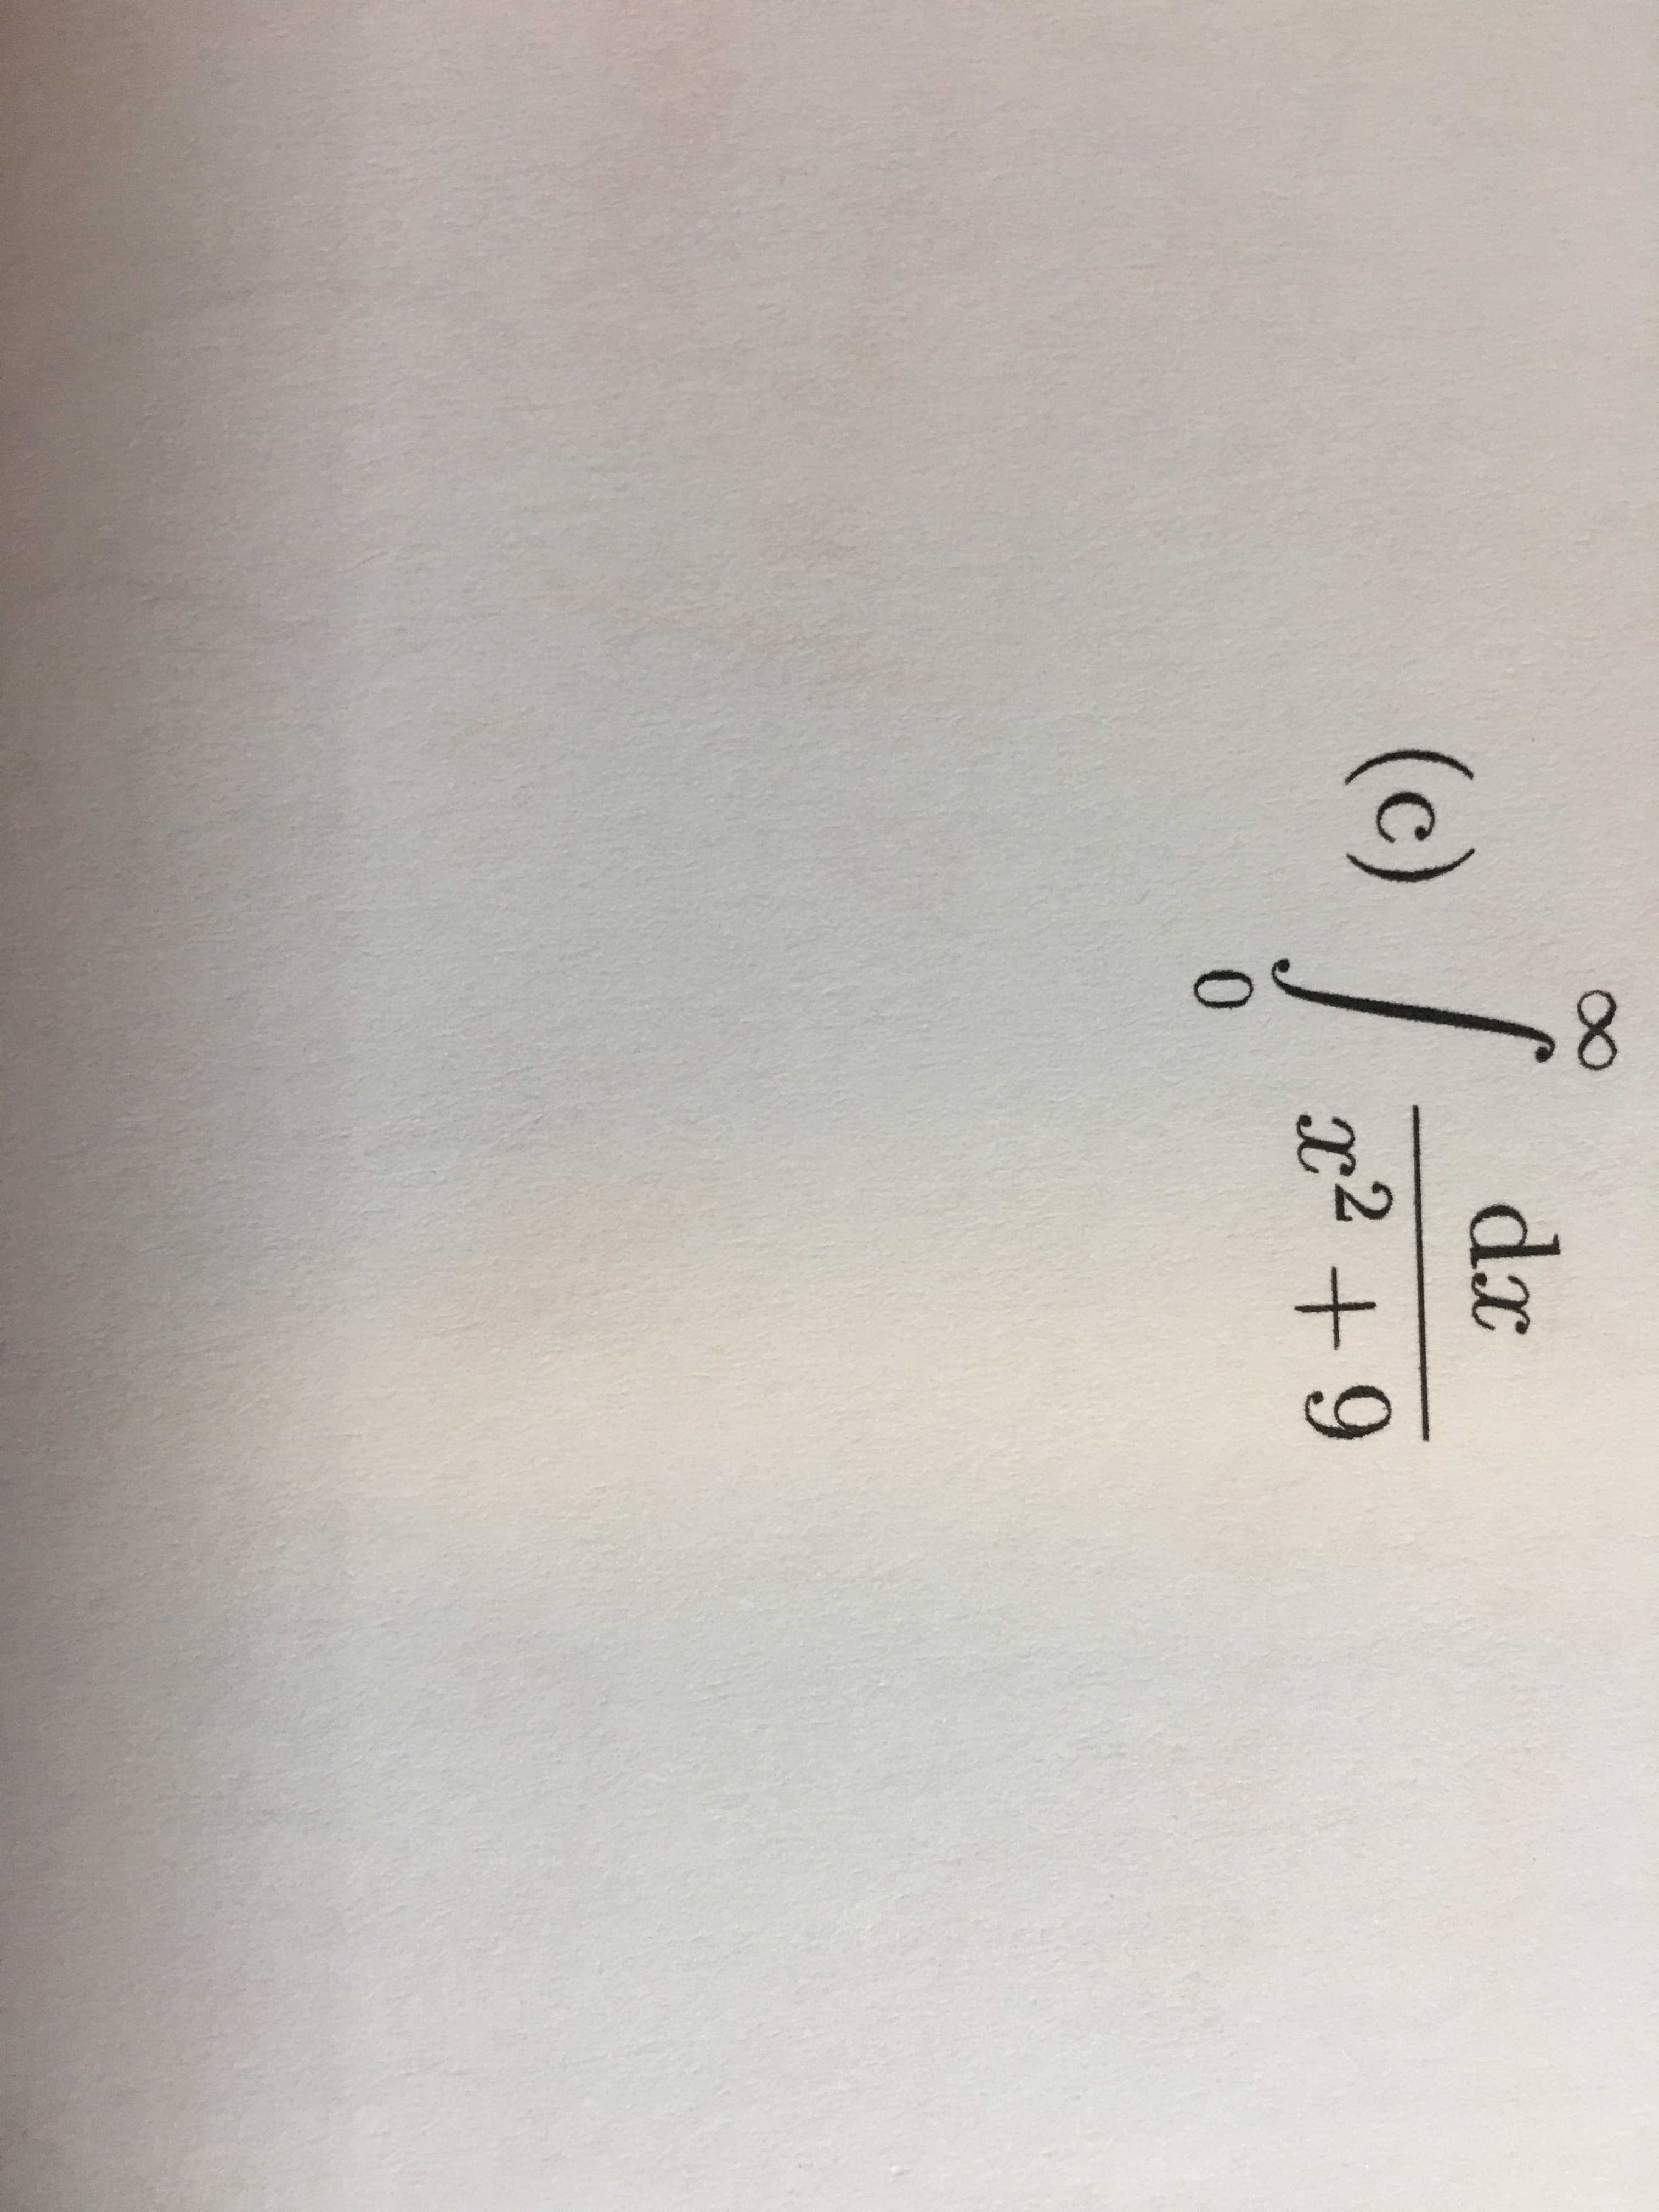 8.
dx
:)
x² +9
0.
